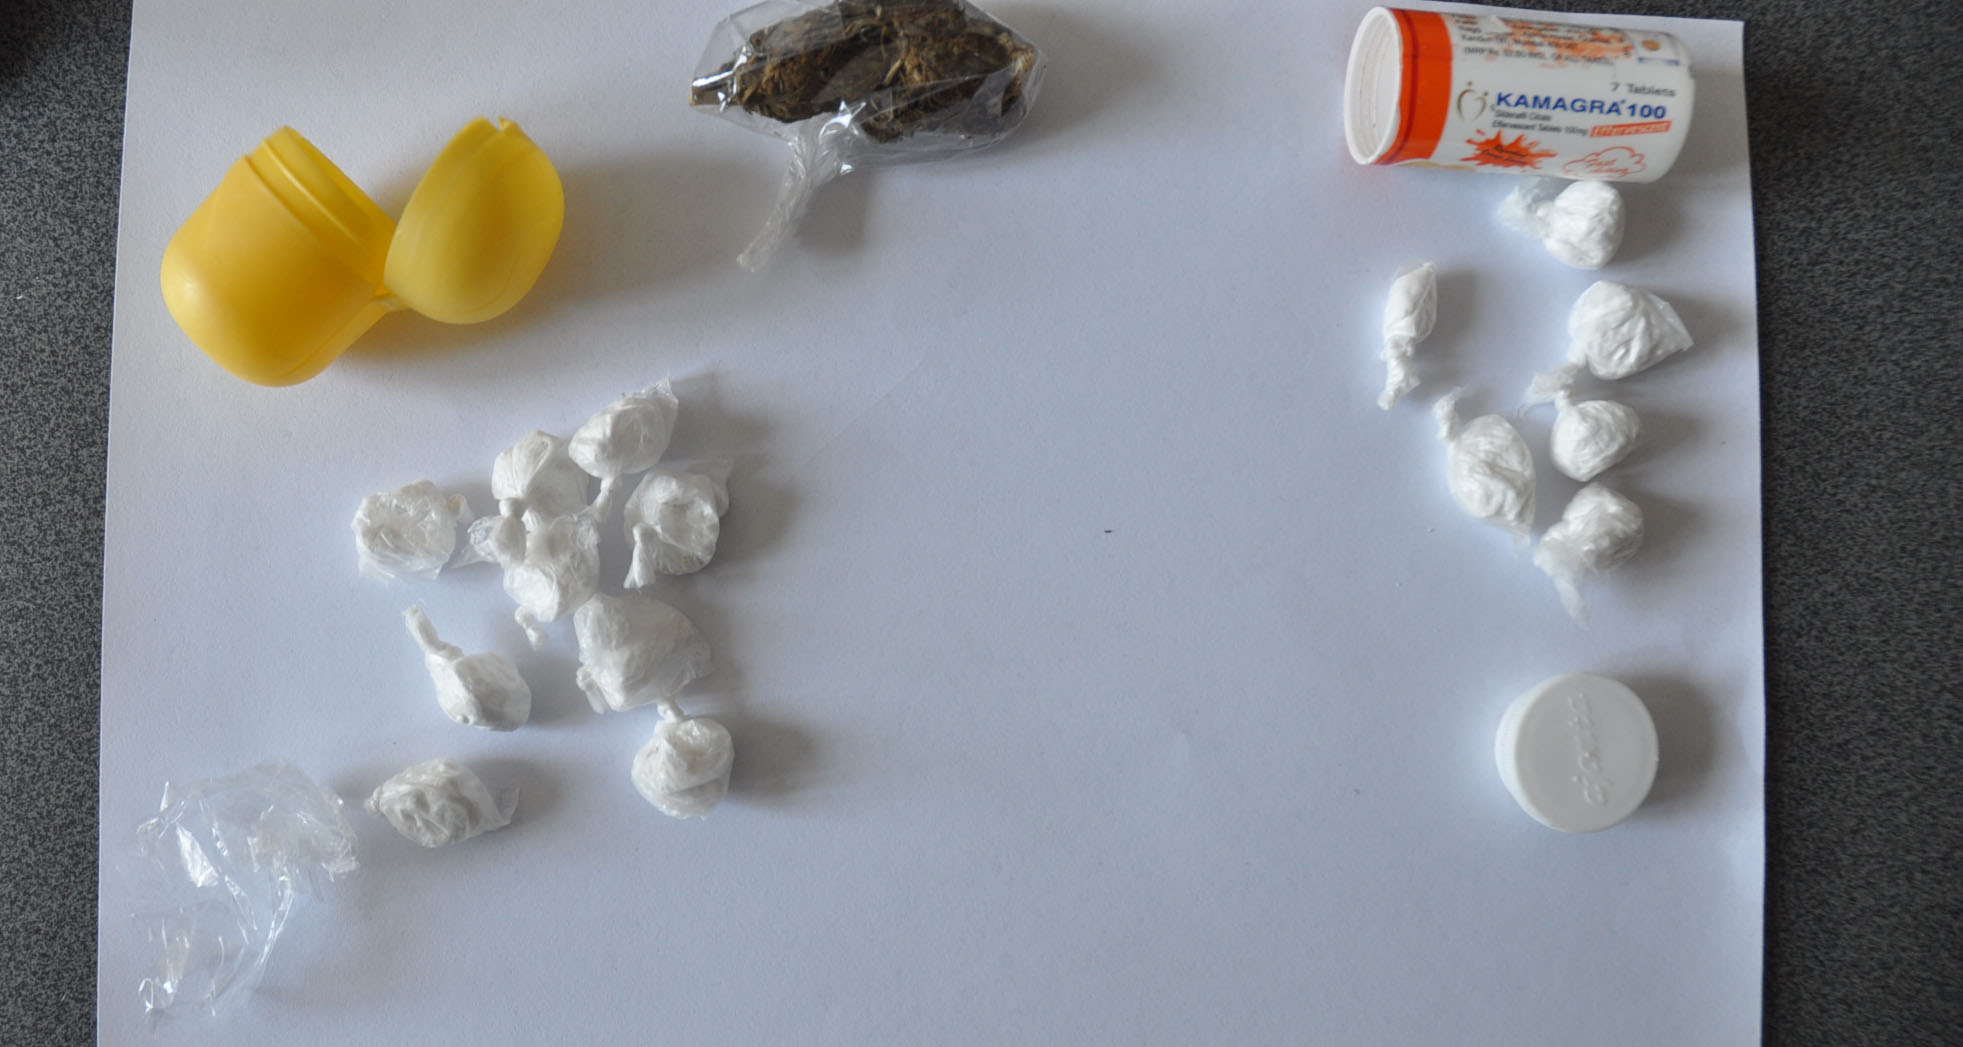 Zaplenjeno više od 1.000 tableta MDMA, kokain i amfetamin